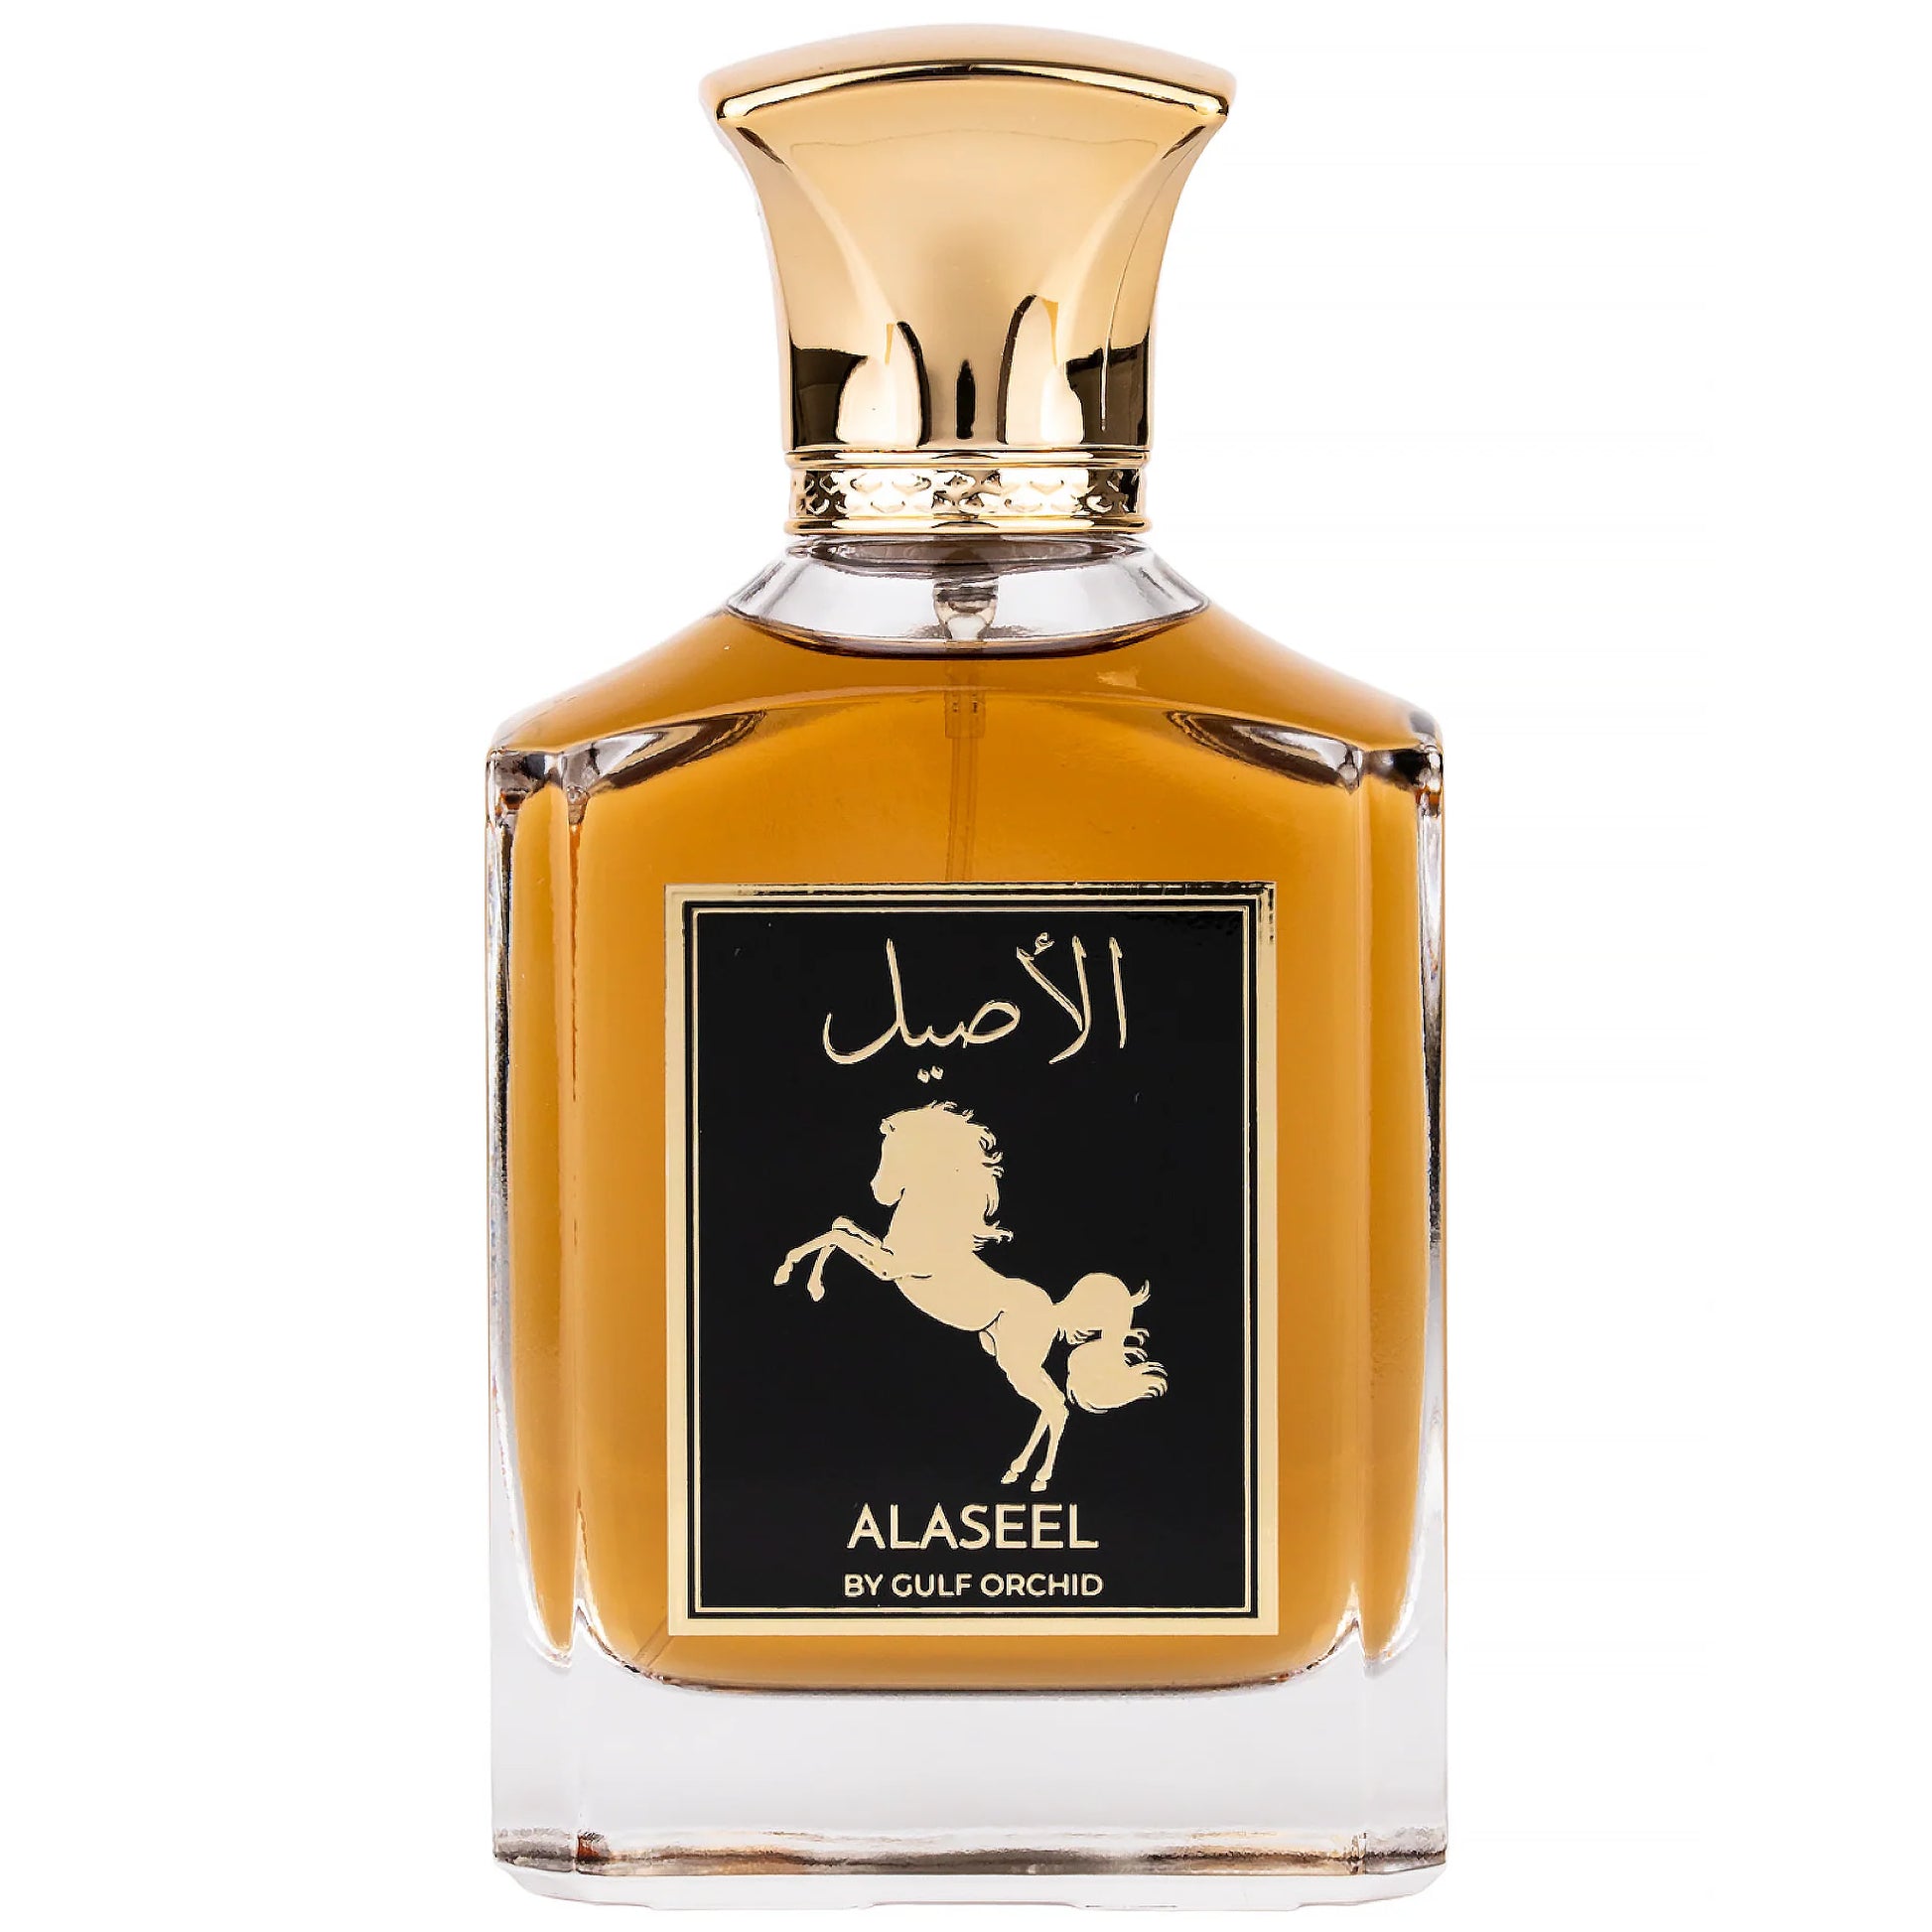 Alaseel Long Lasting Perfume - Bleu De Chanel Parfum Alternative